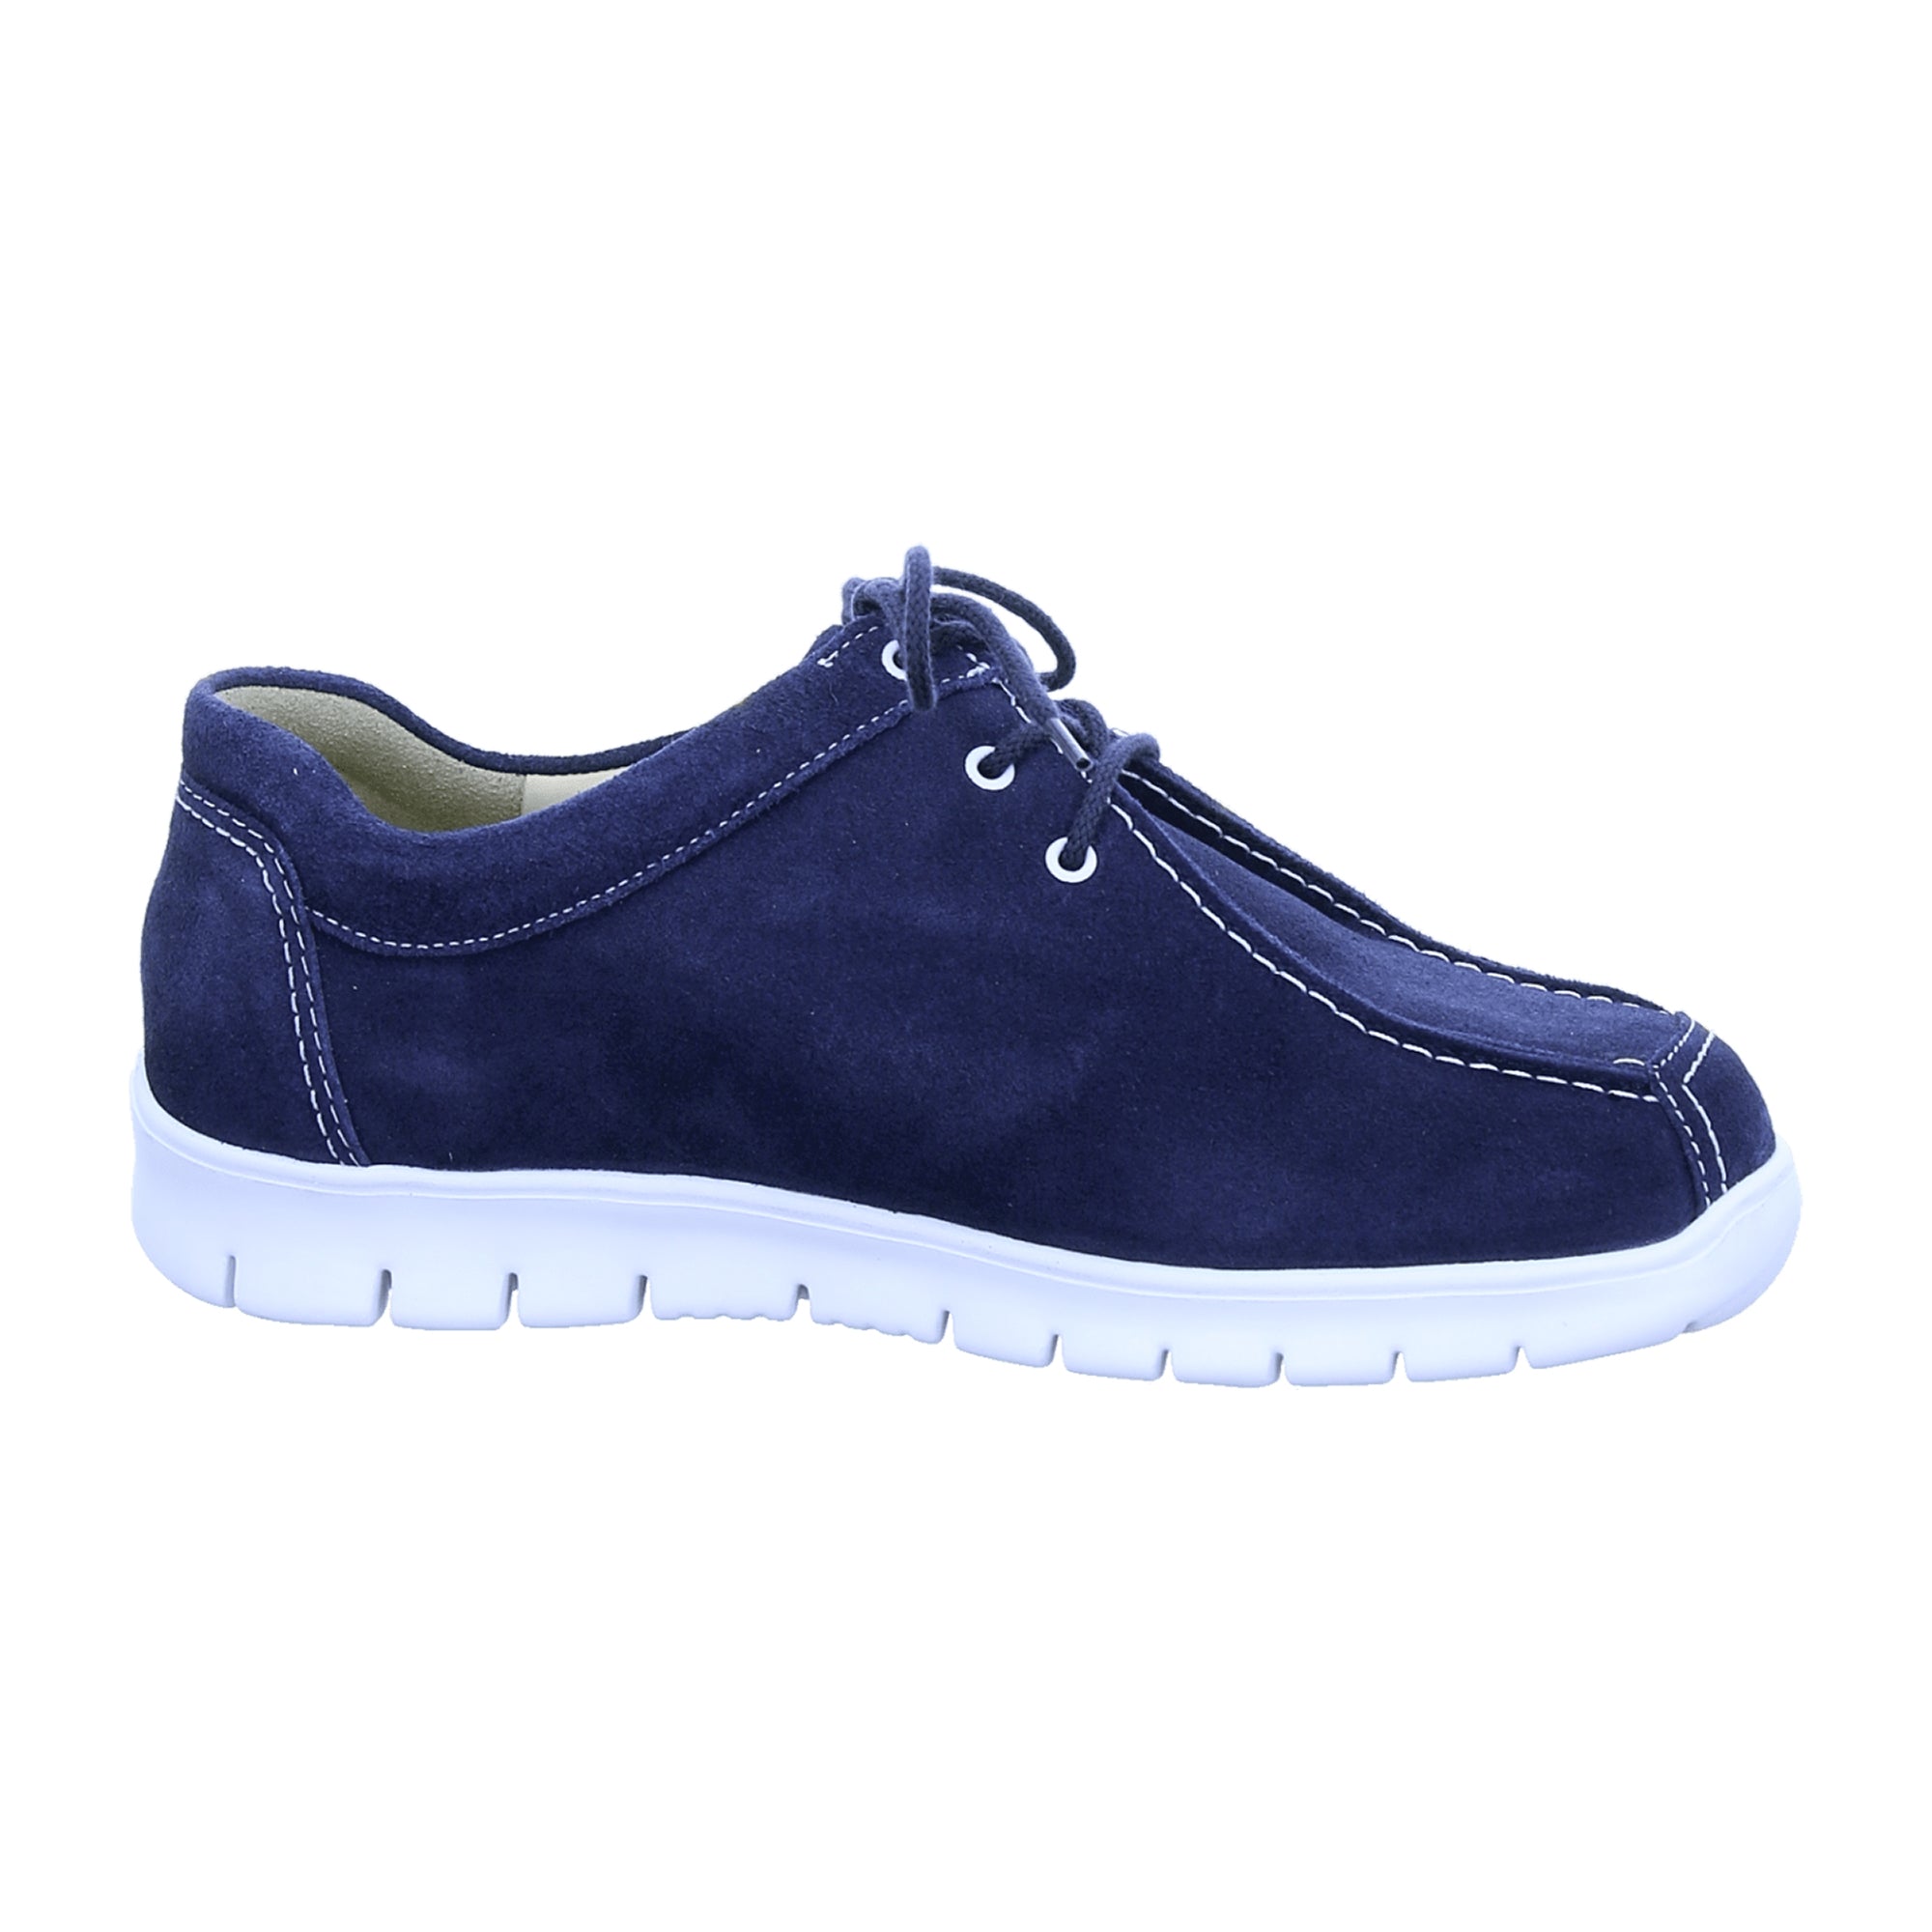 Finn Comfort Bahia Women's Sandals, Stylish Blue Comfort Footwear